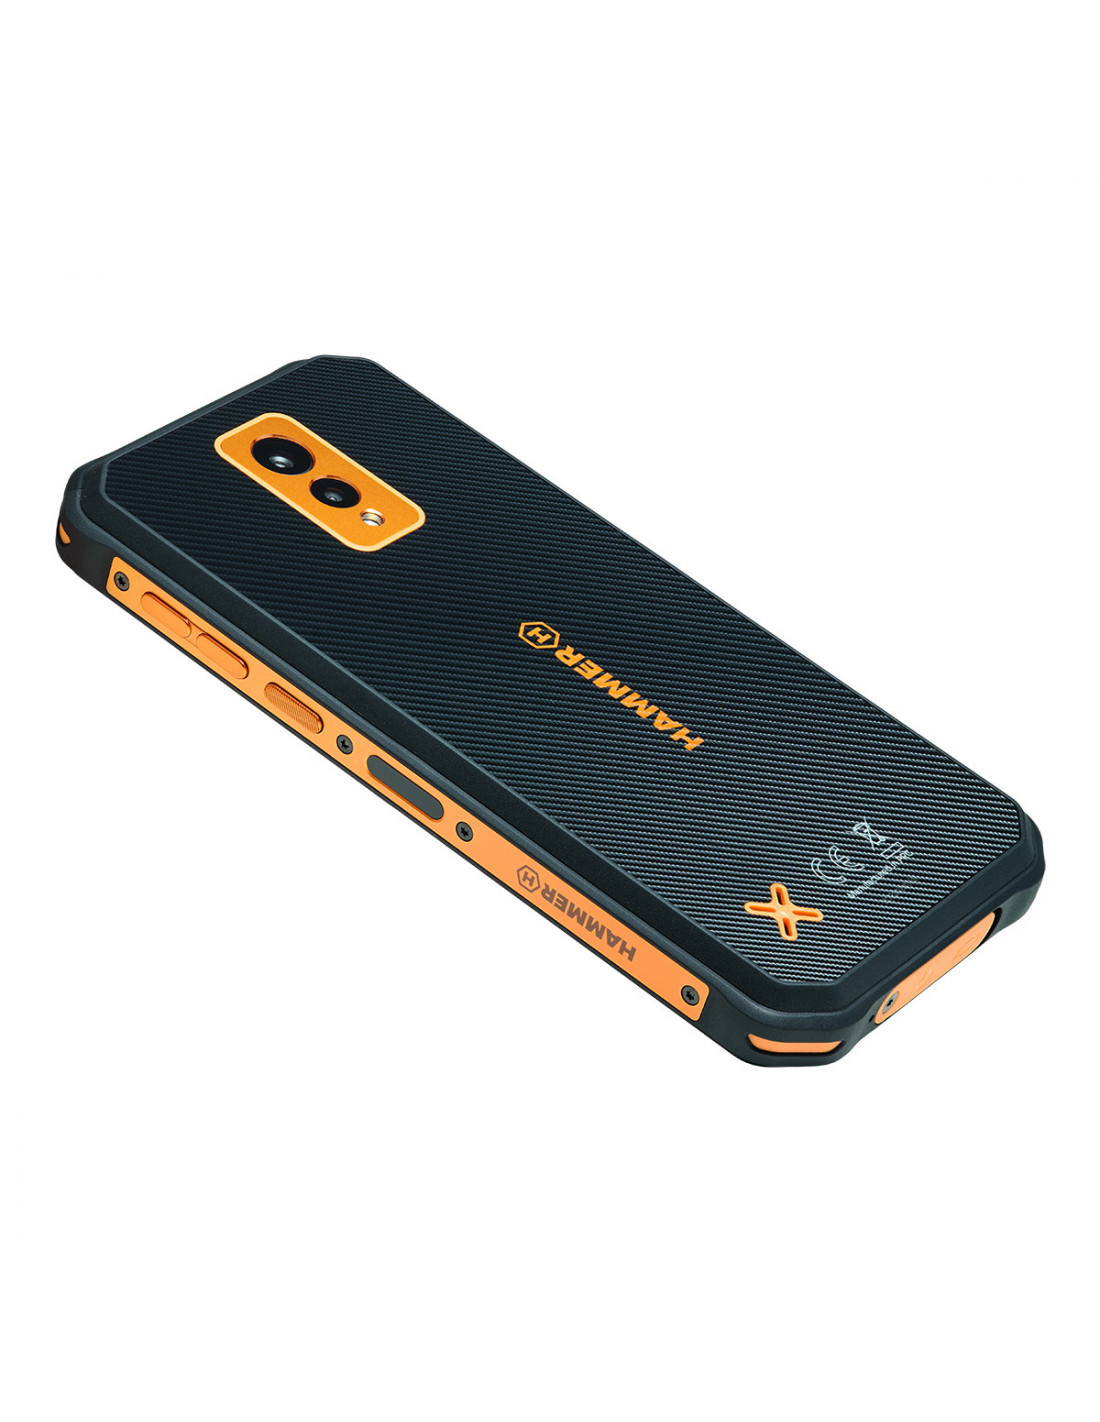 Muvit Energy Pack / Cargador Coche Usb-c + Soporte Smartphone